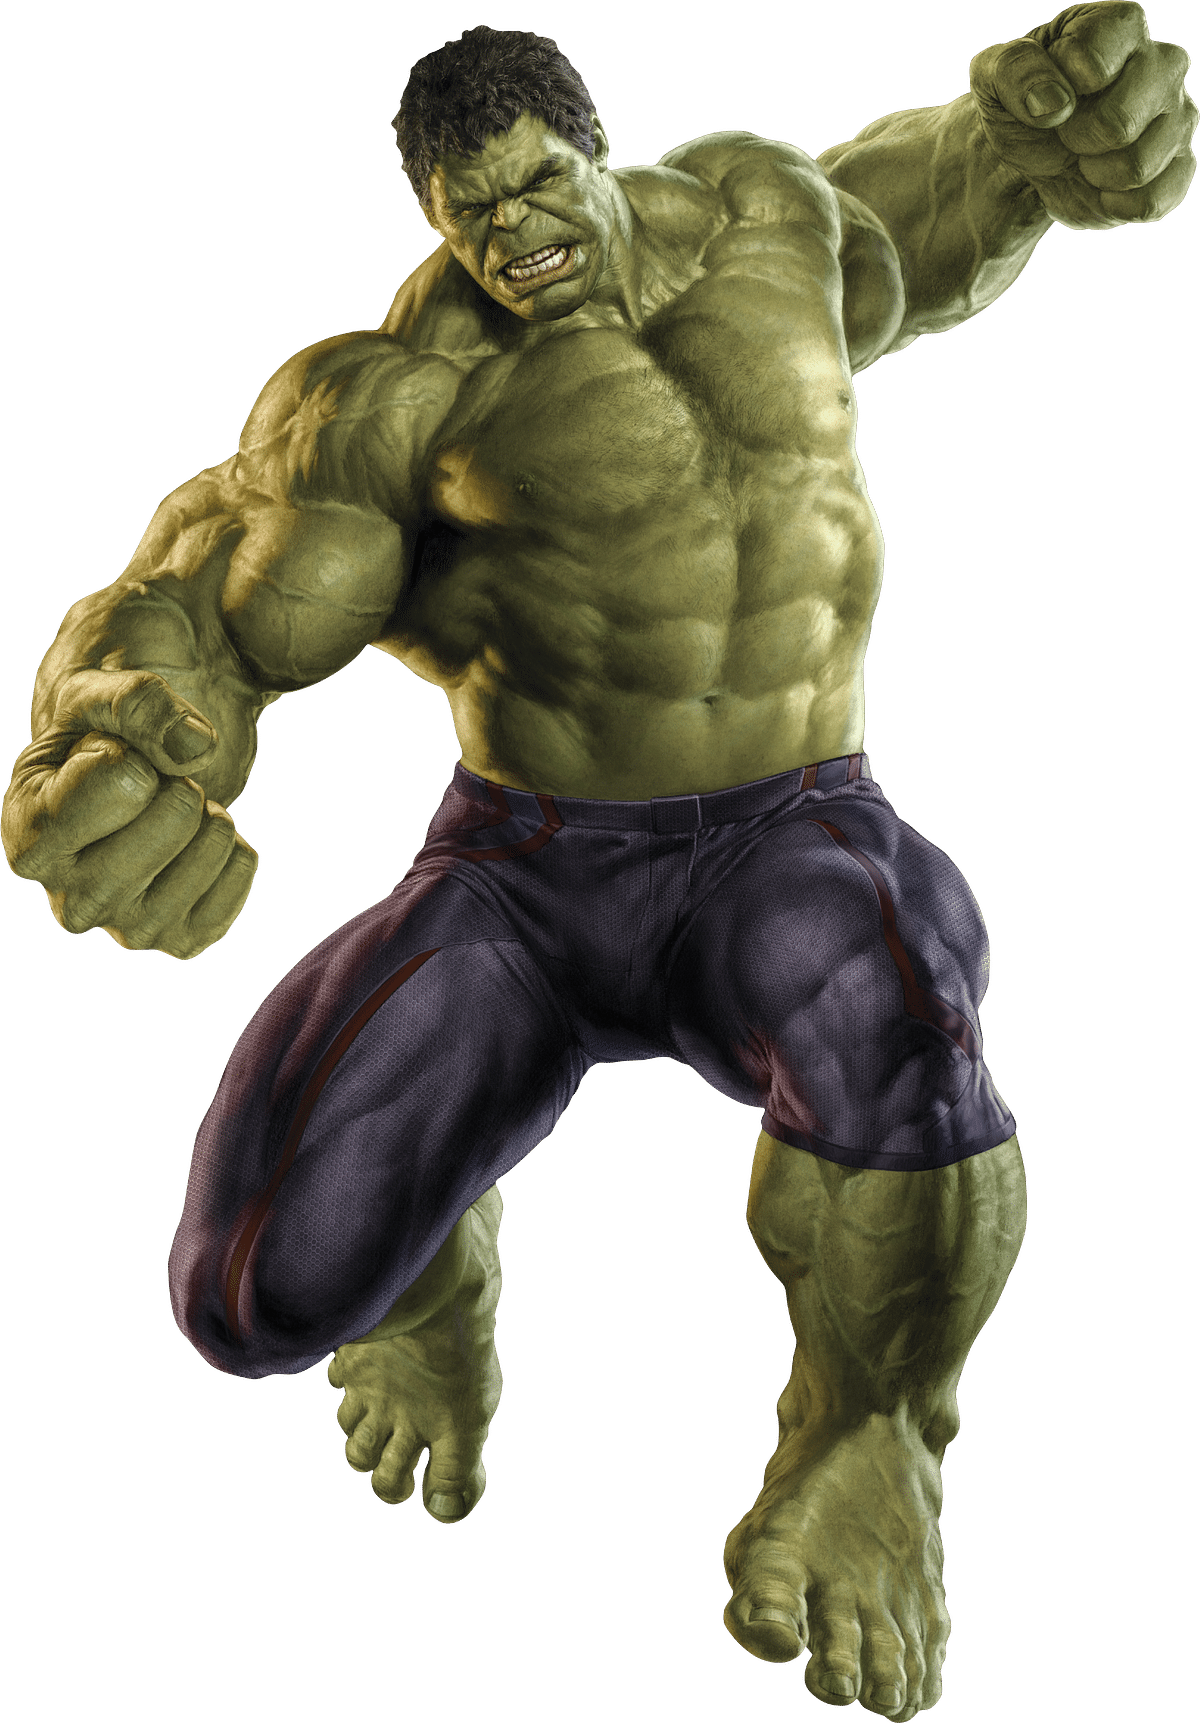 The Incredible Hulk costume